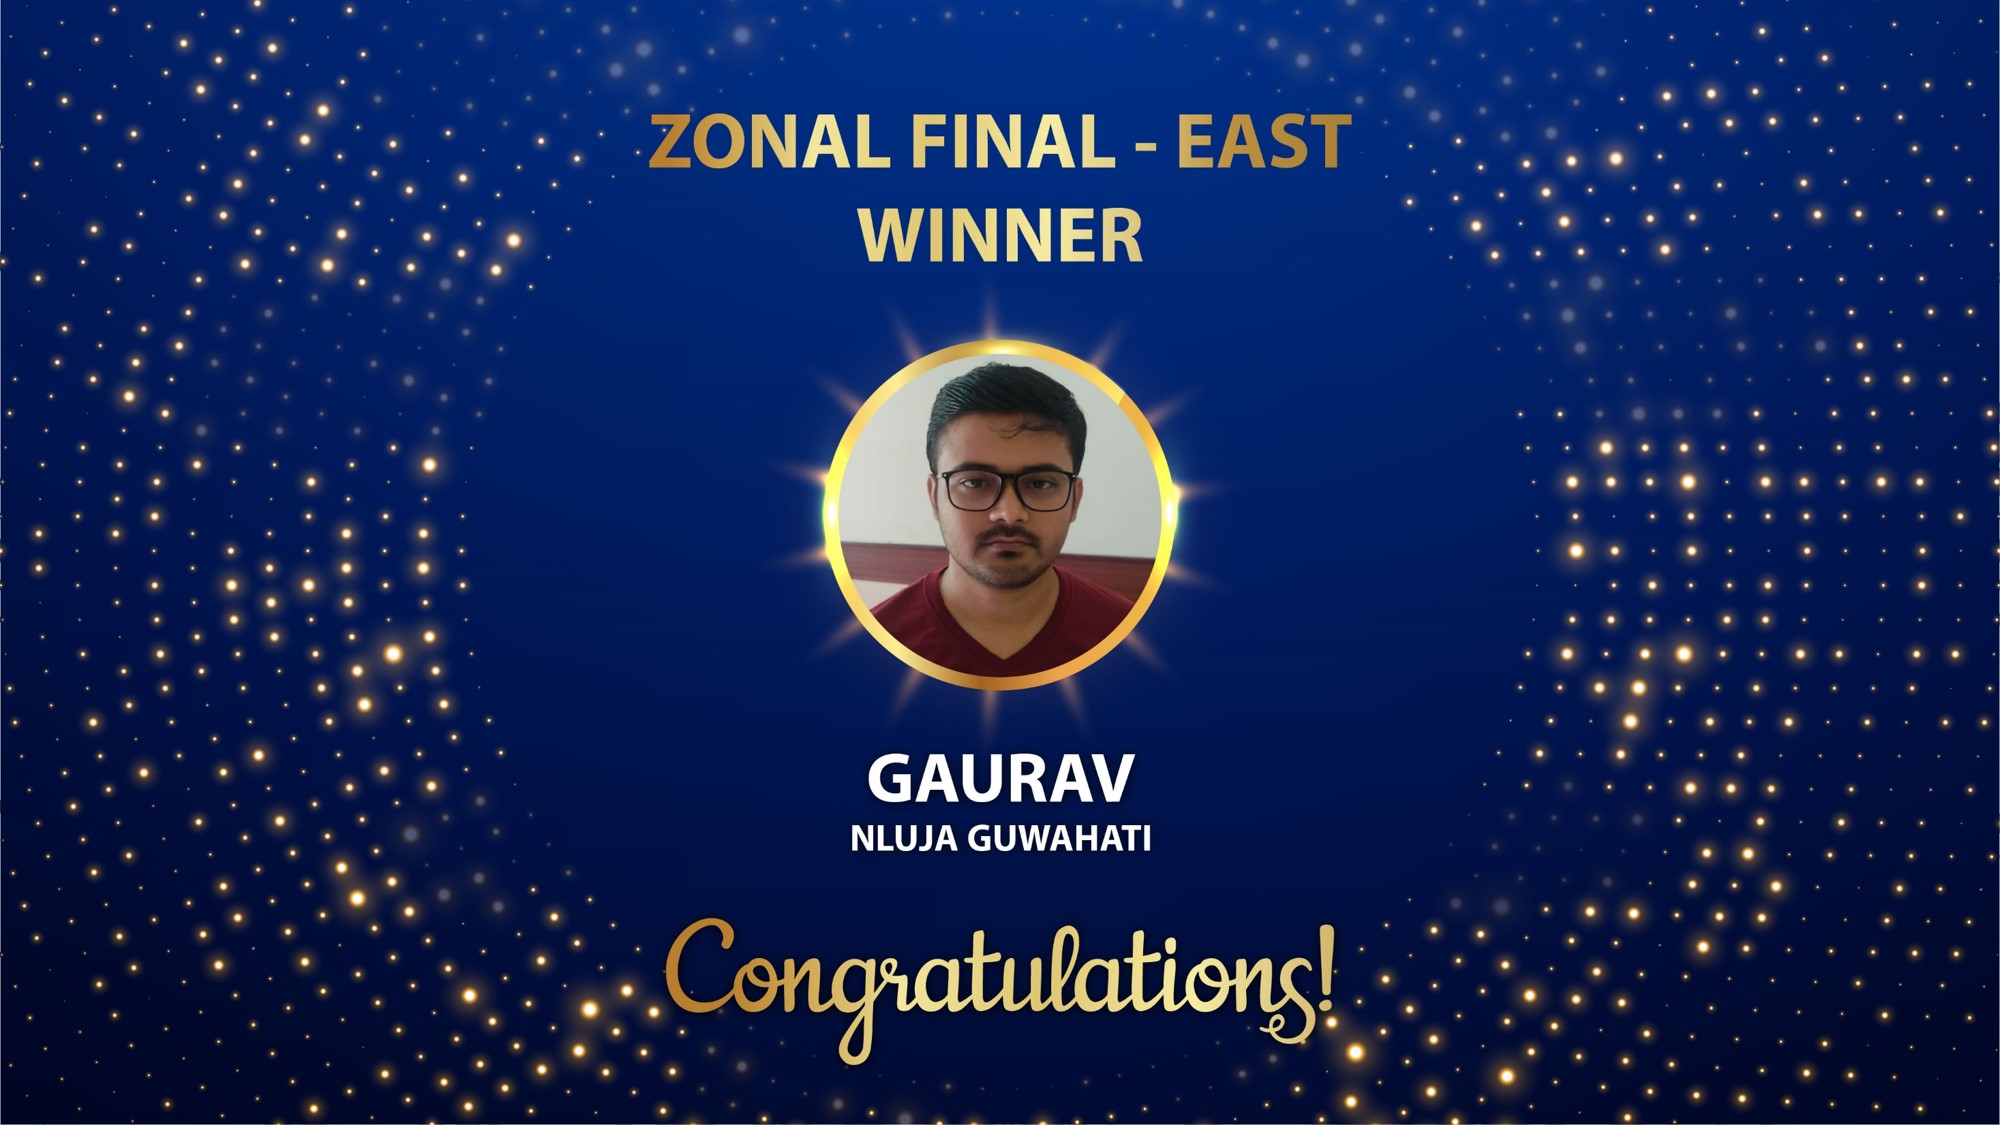 NLUJA Guwahati reigns supreme in Zonal Finals of Tata Crucible Campus Quiz 2022